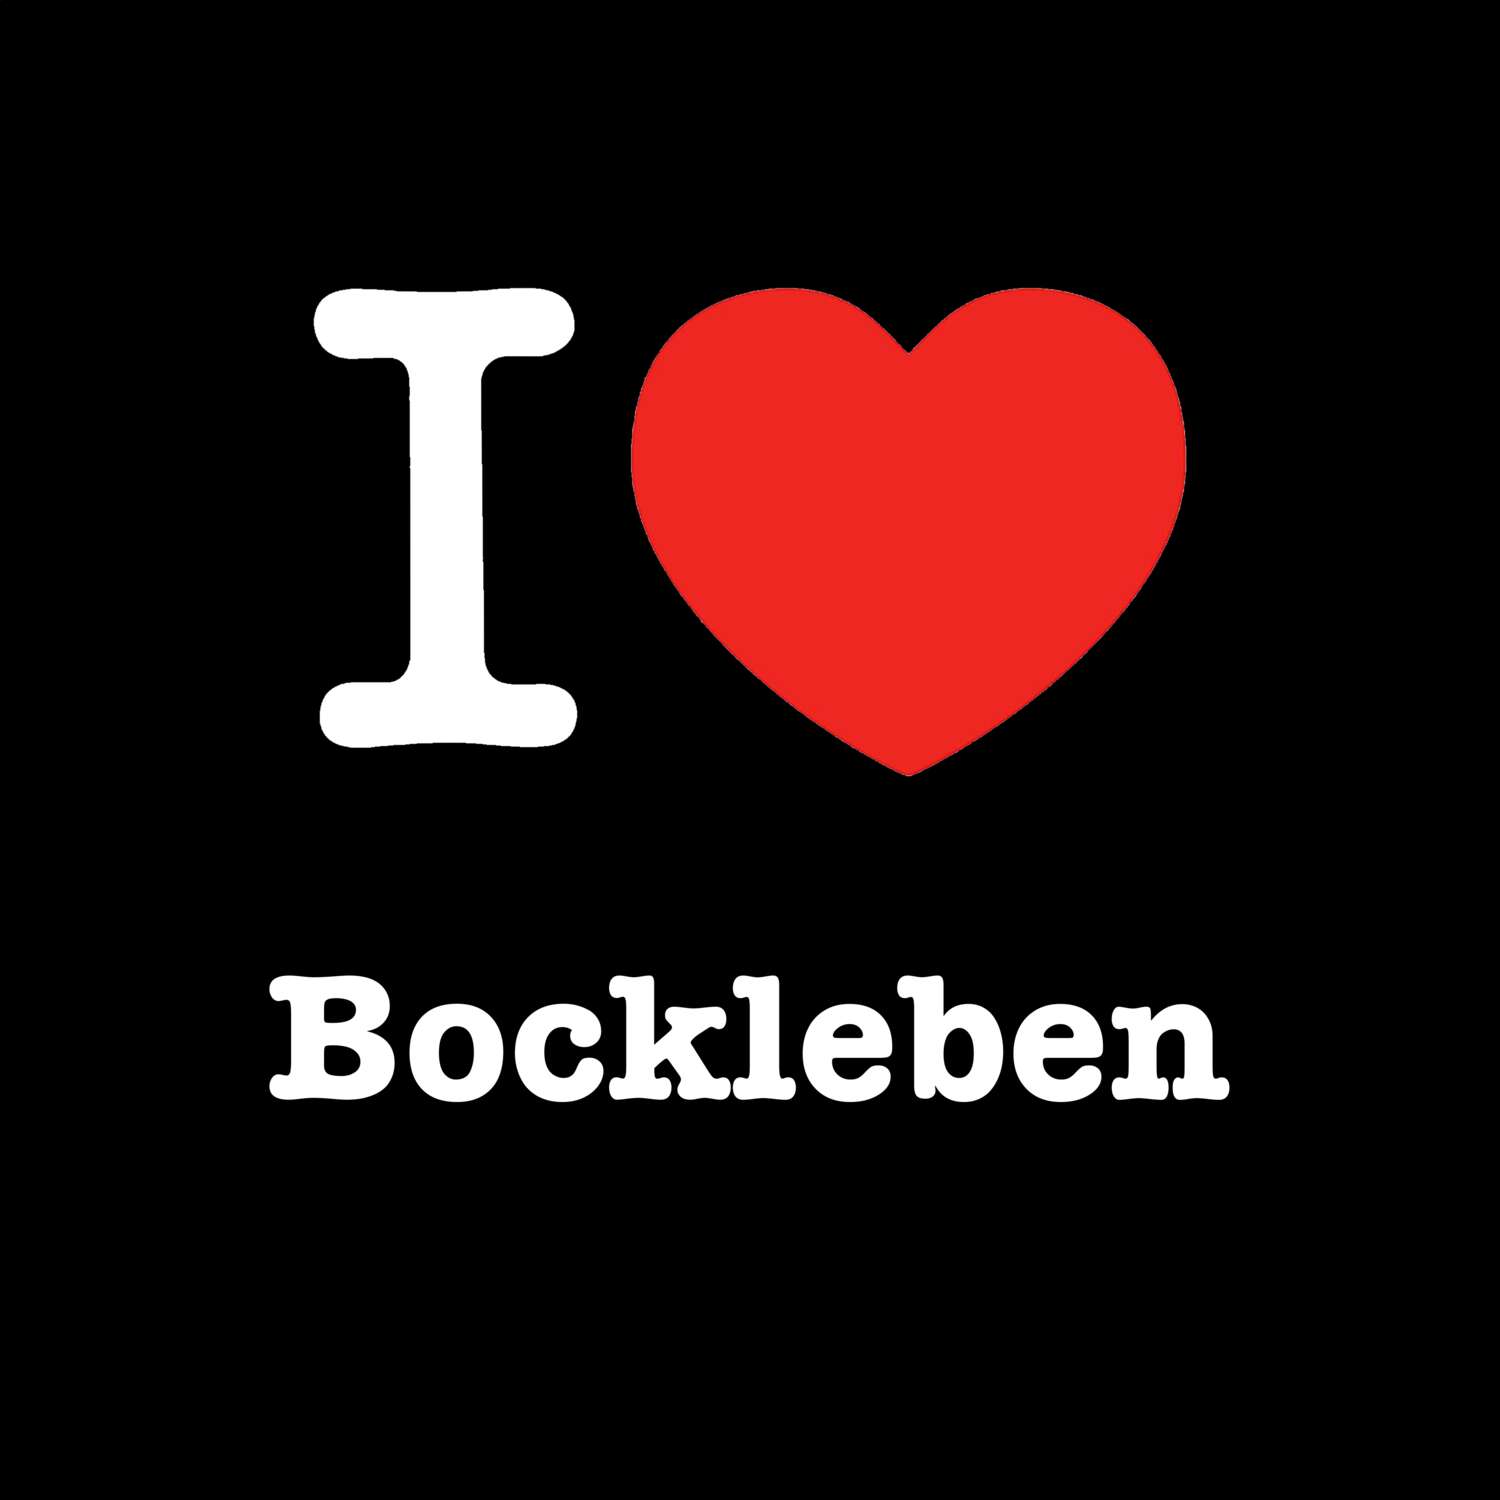 Bockleben T-Shirt »I love«